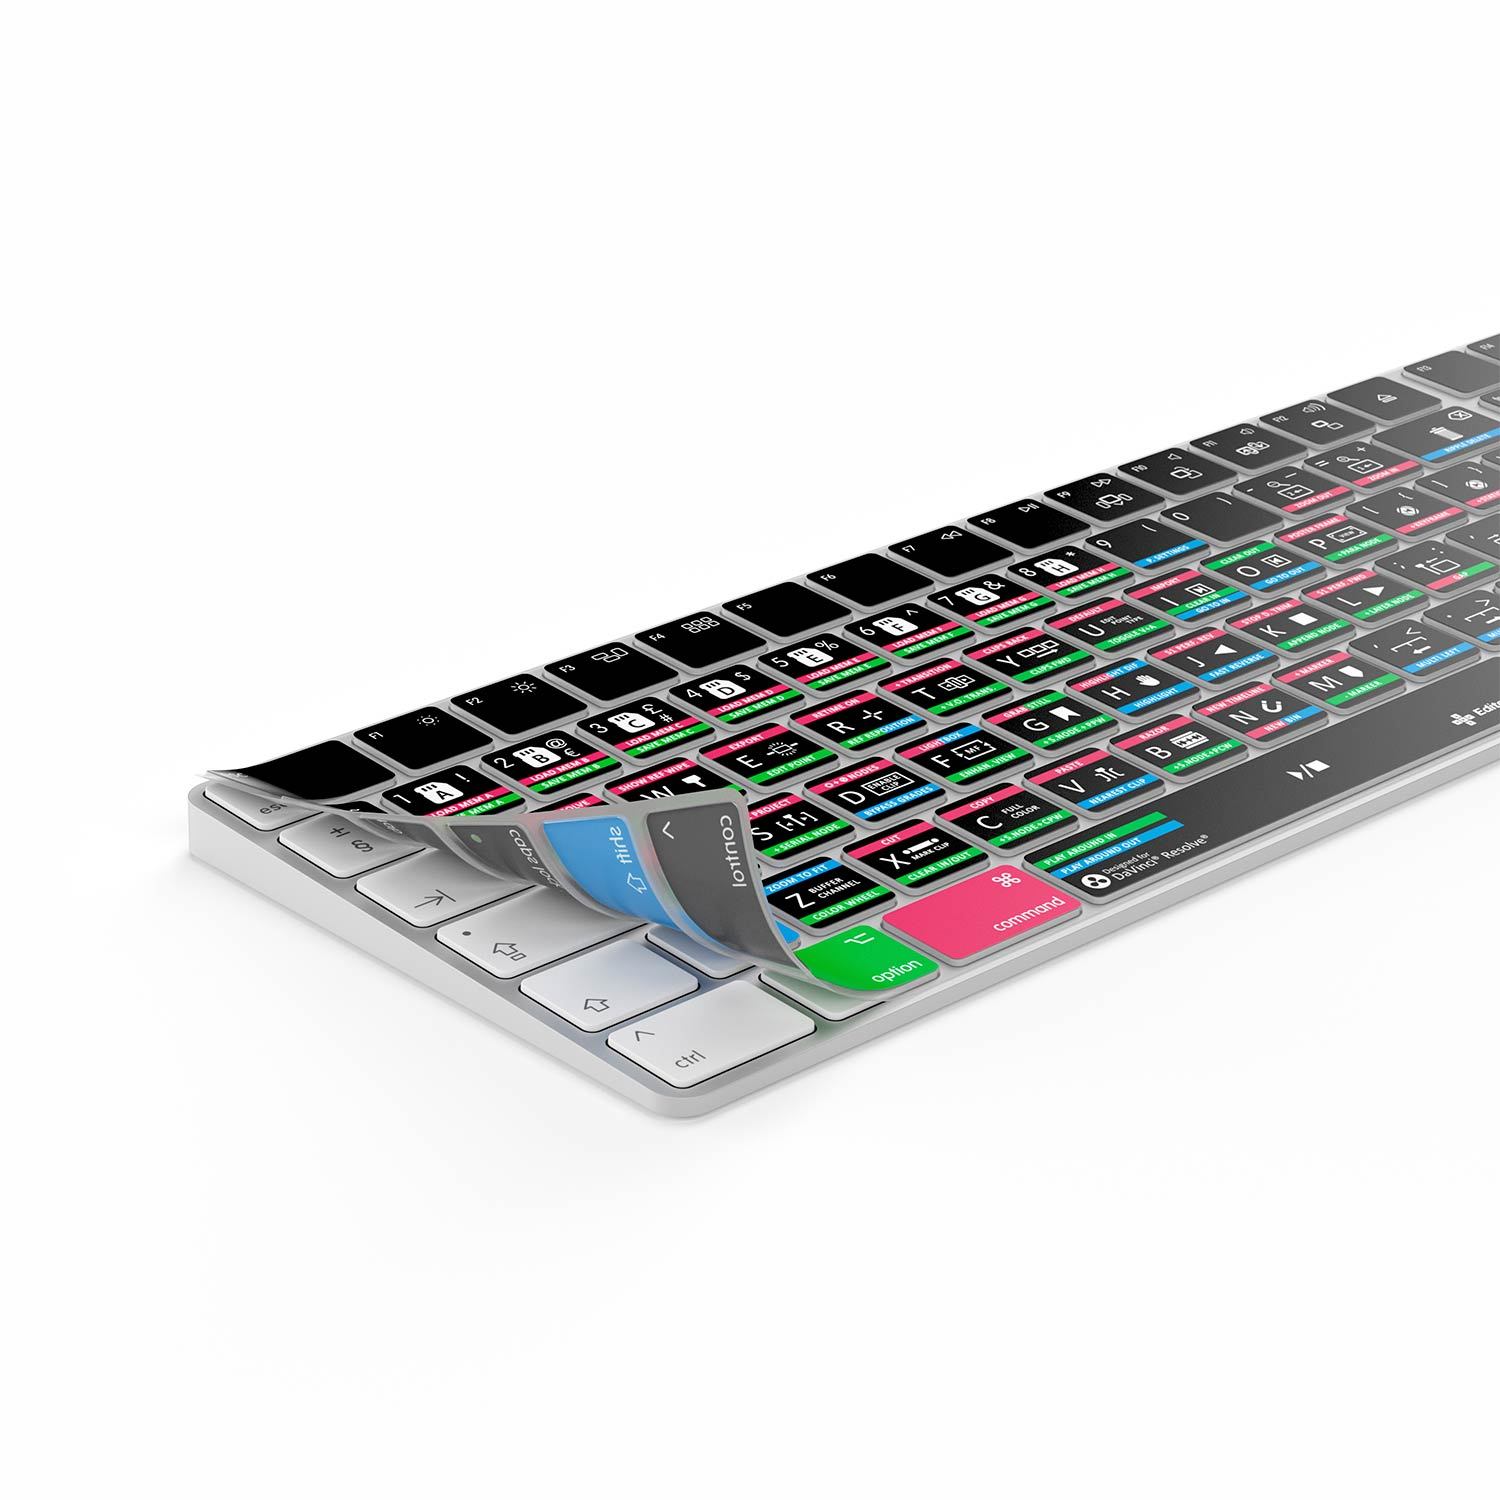 DaVinci Resolve Keyboard Covers for MacBook and iMac - Editors Keys